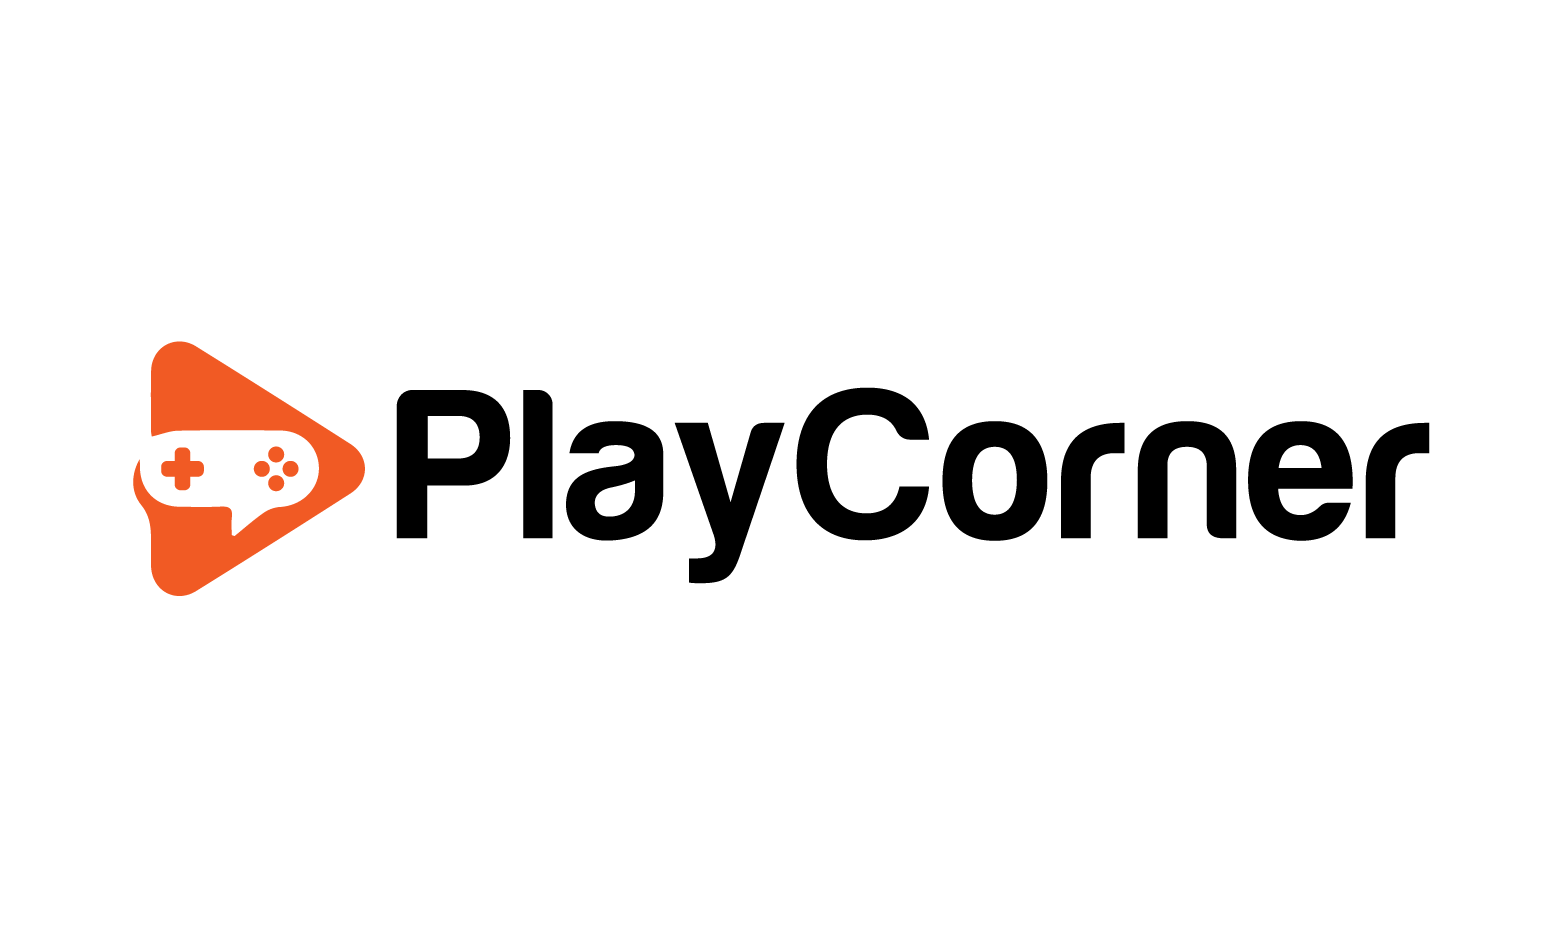 PlayCorner.com - Creative brandable domain for sale